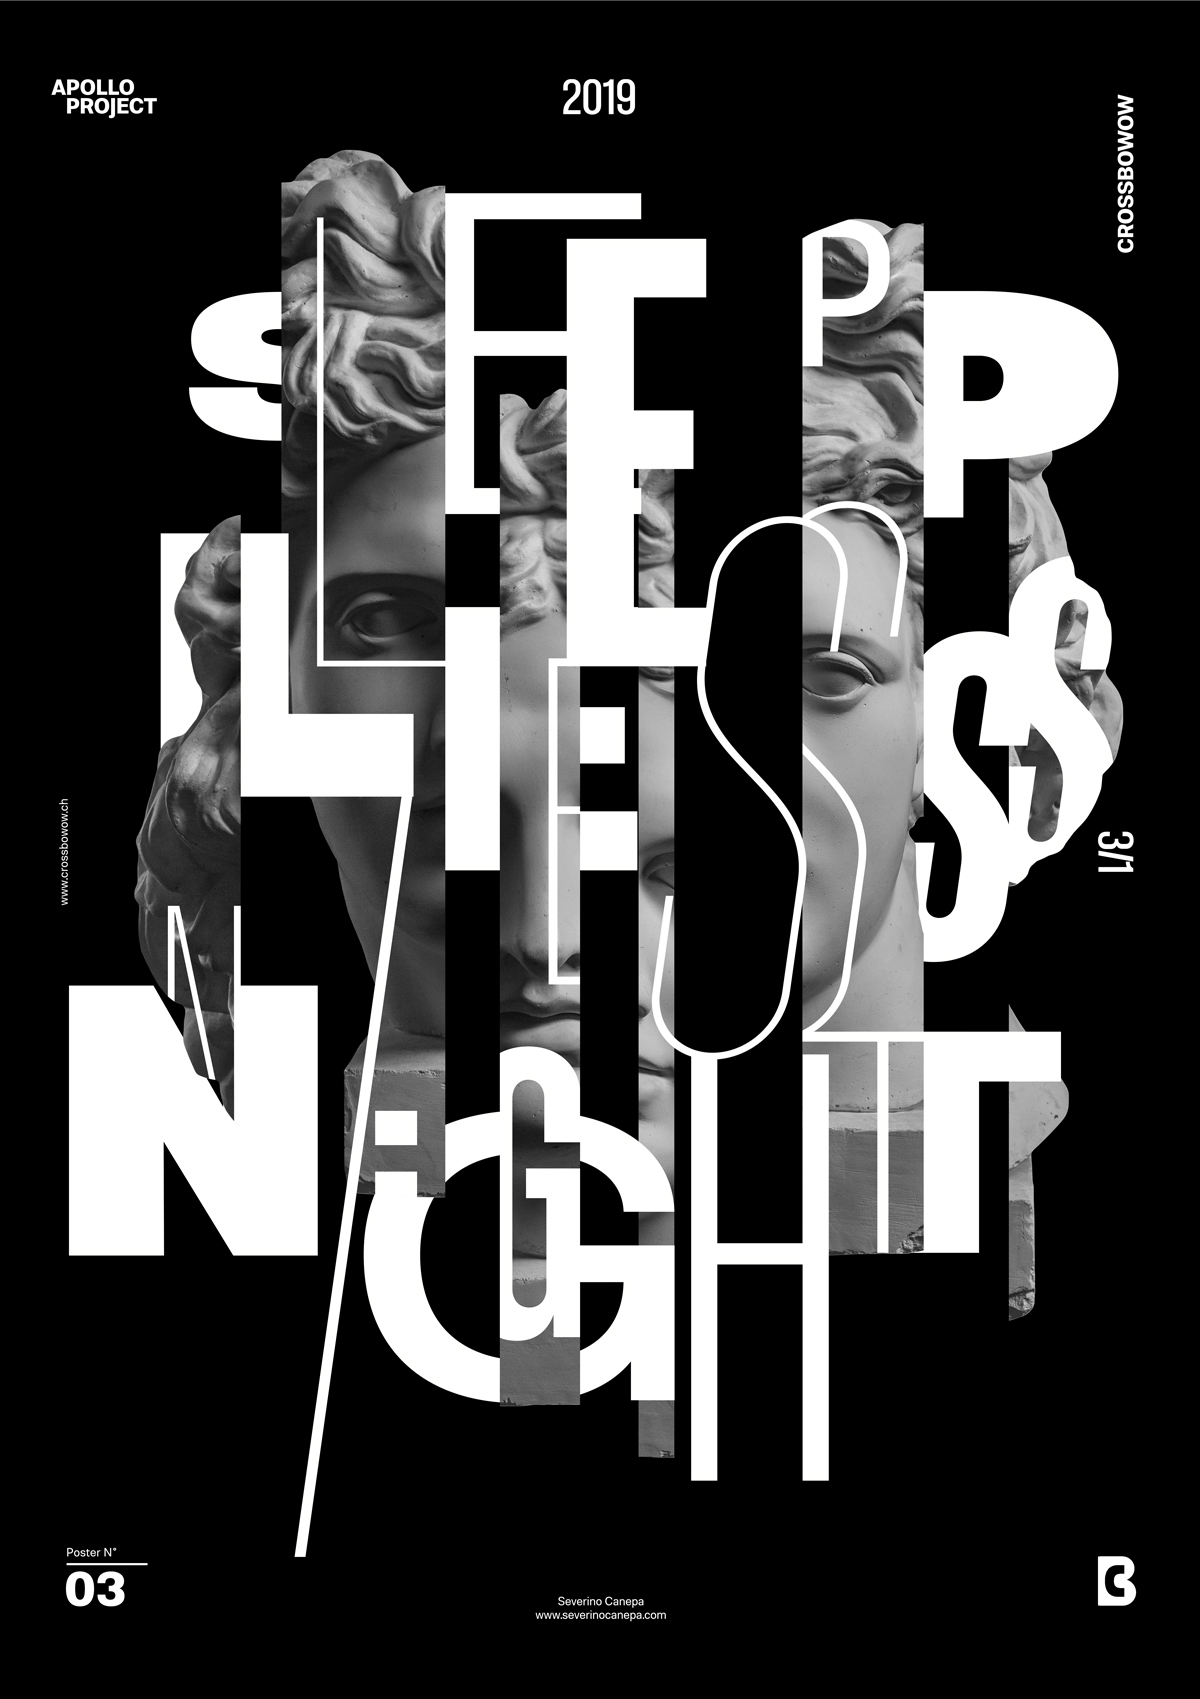 Third Poster Design of Apollo 365 Challenge entitled Sleepless Night